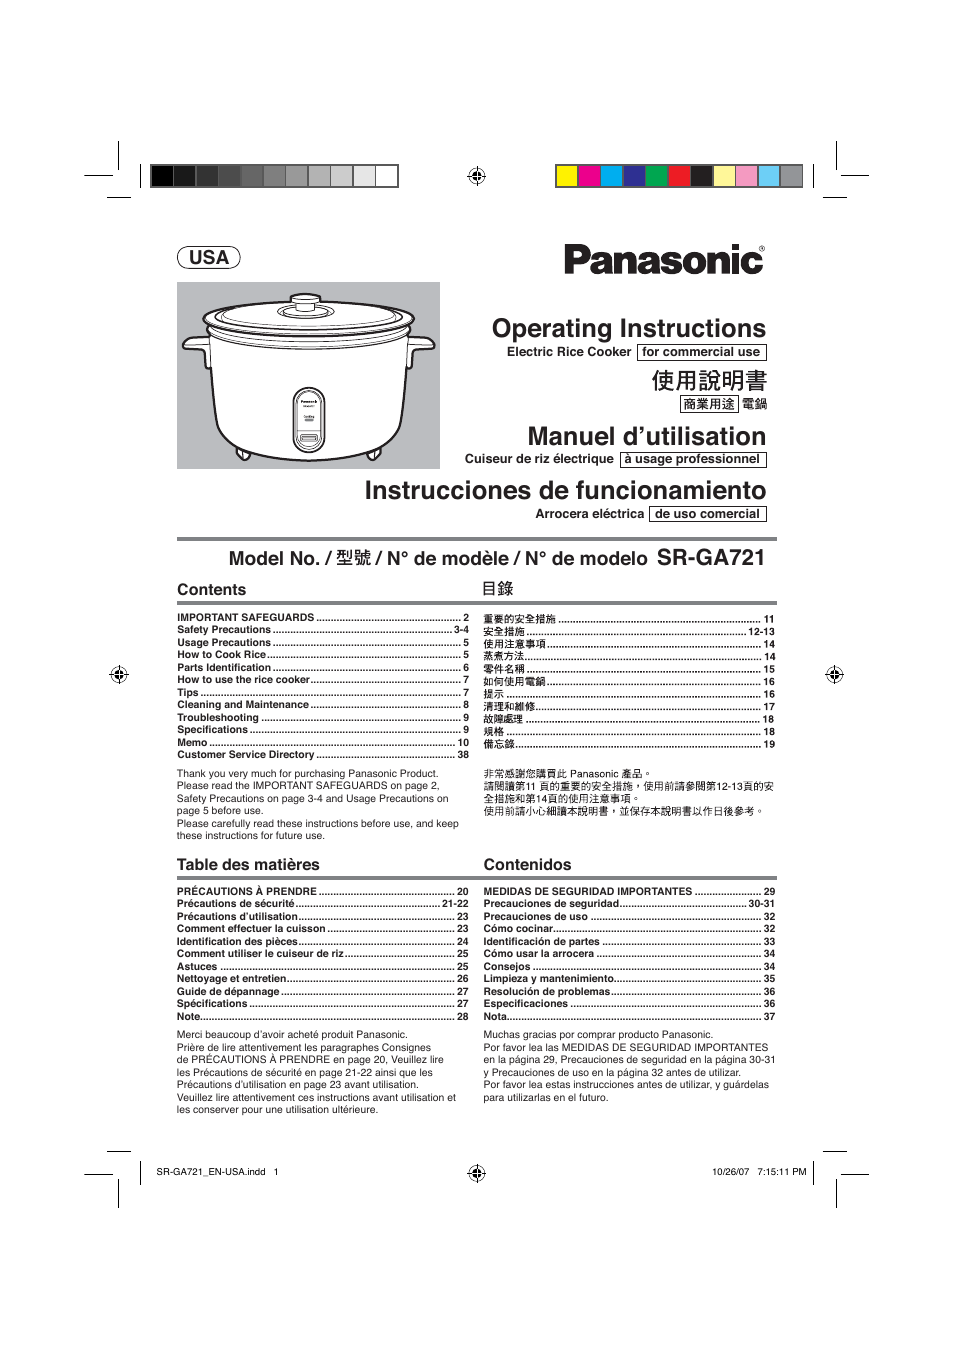 Panasonic SR-GA721 User Manual | 39 pages | Original mode